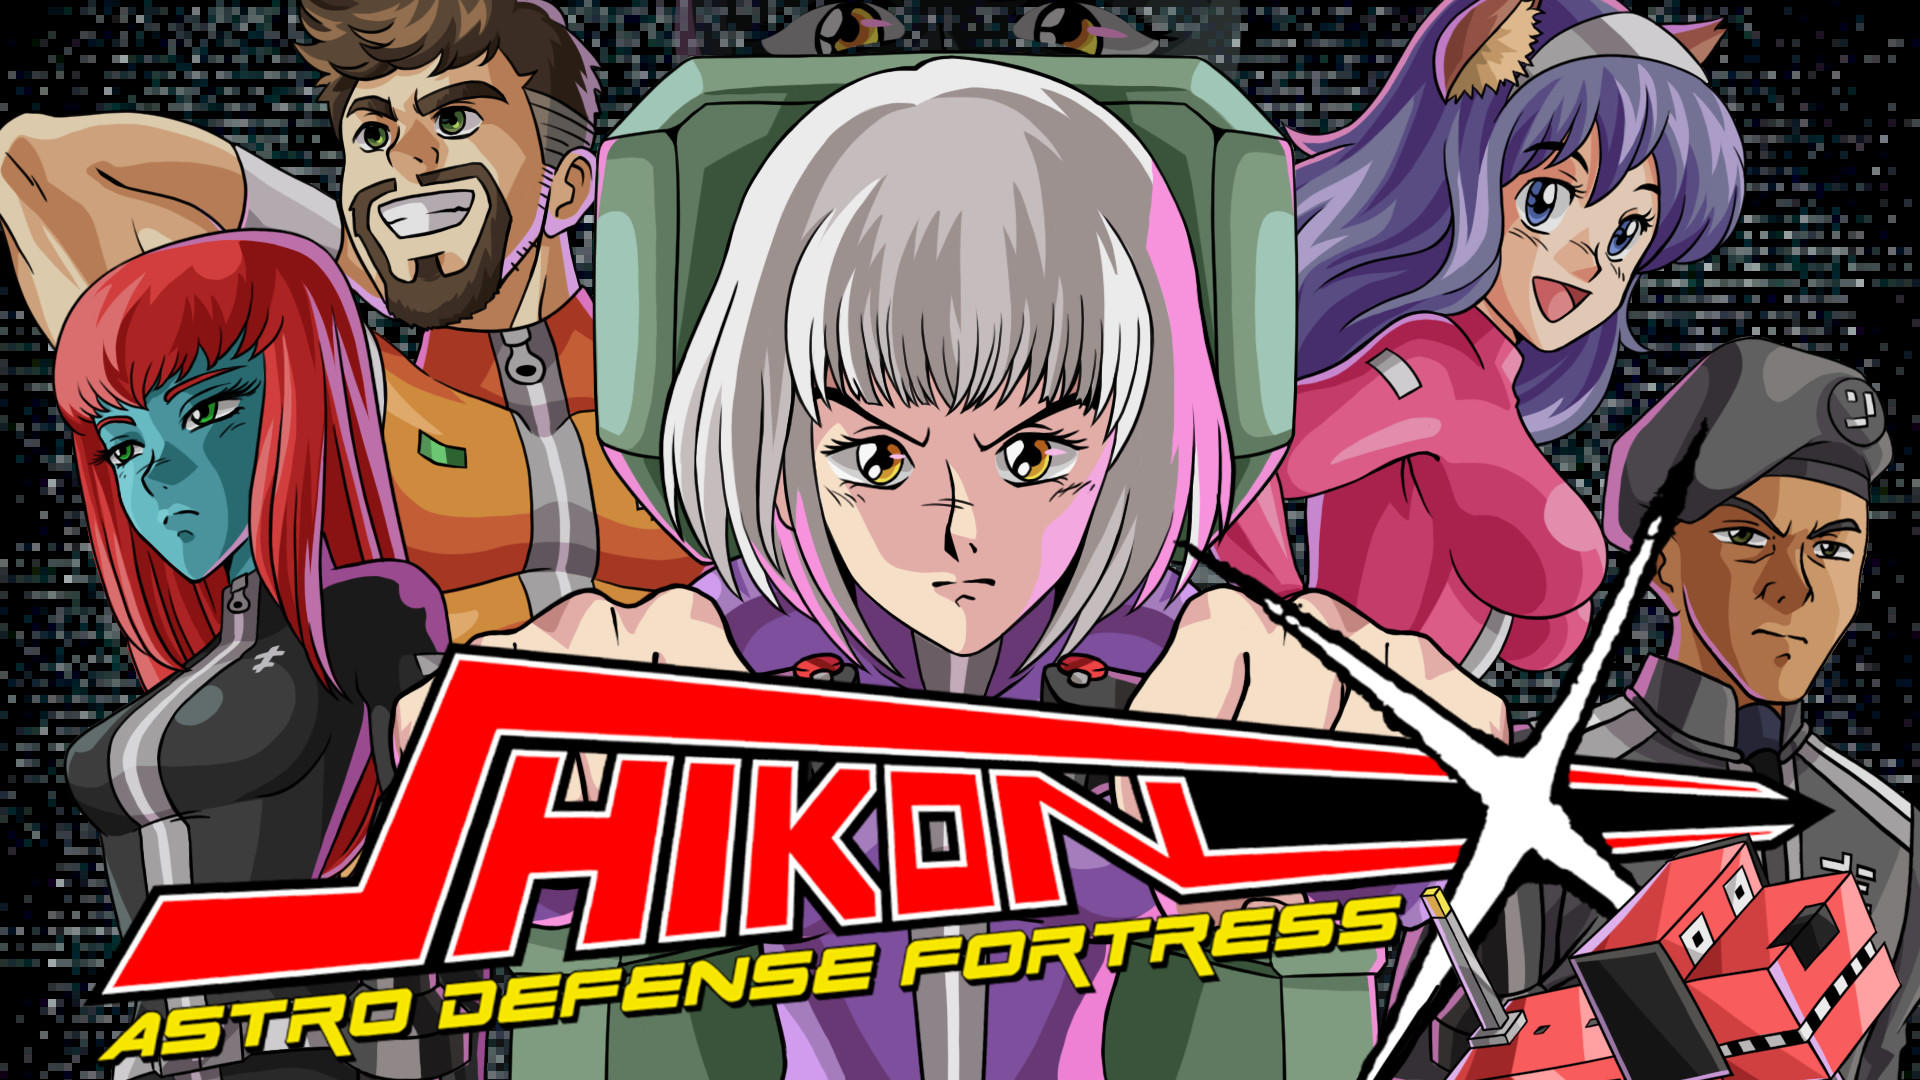 Shikon-X Astro Defense Fortressのキャプチャ